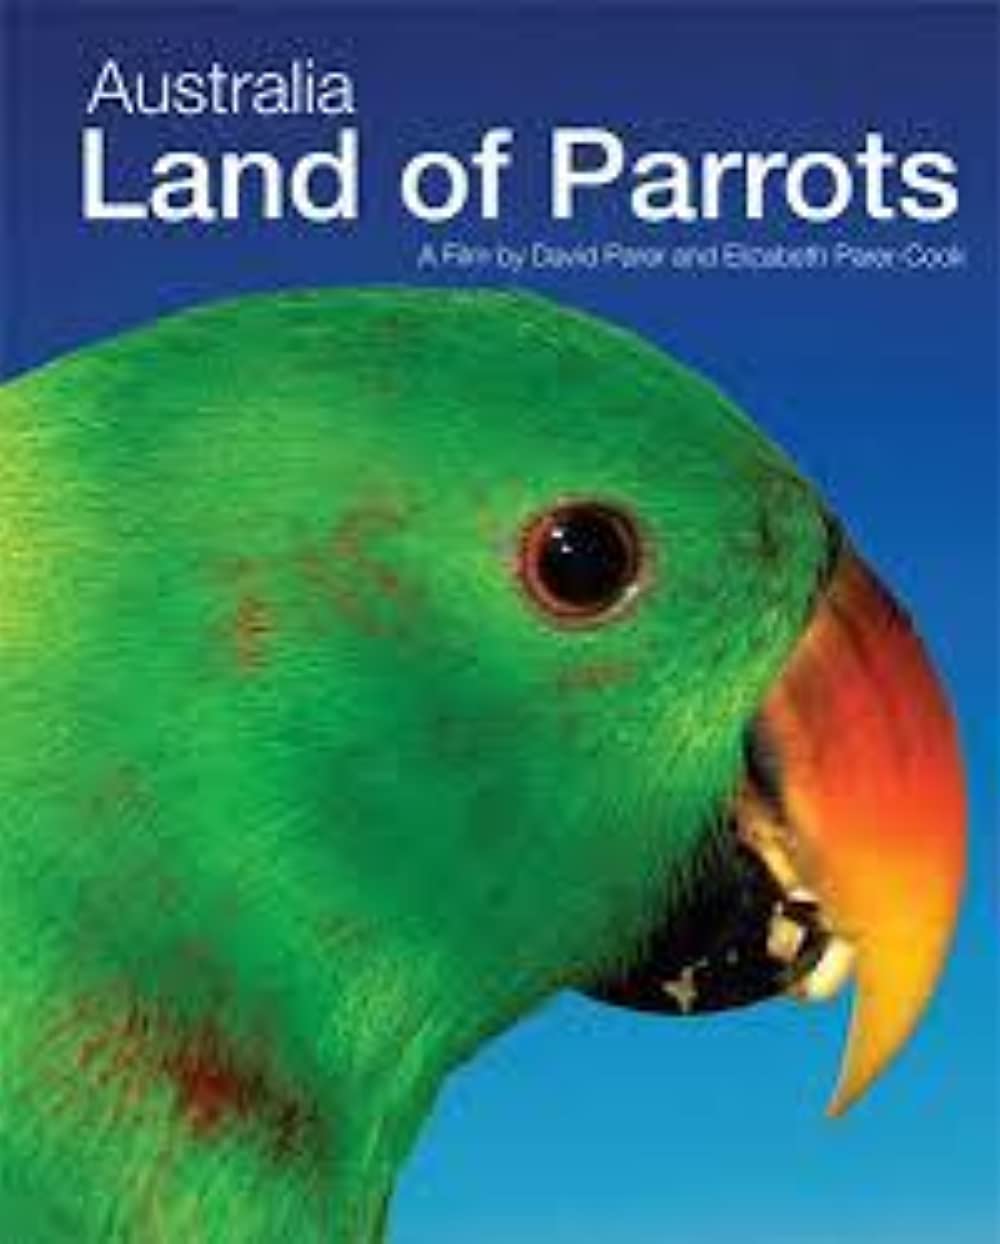 Download Australia: Land of Parrots Movie | Watch Australia: Land Of Parrots